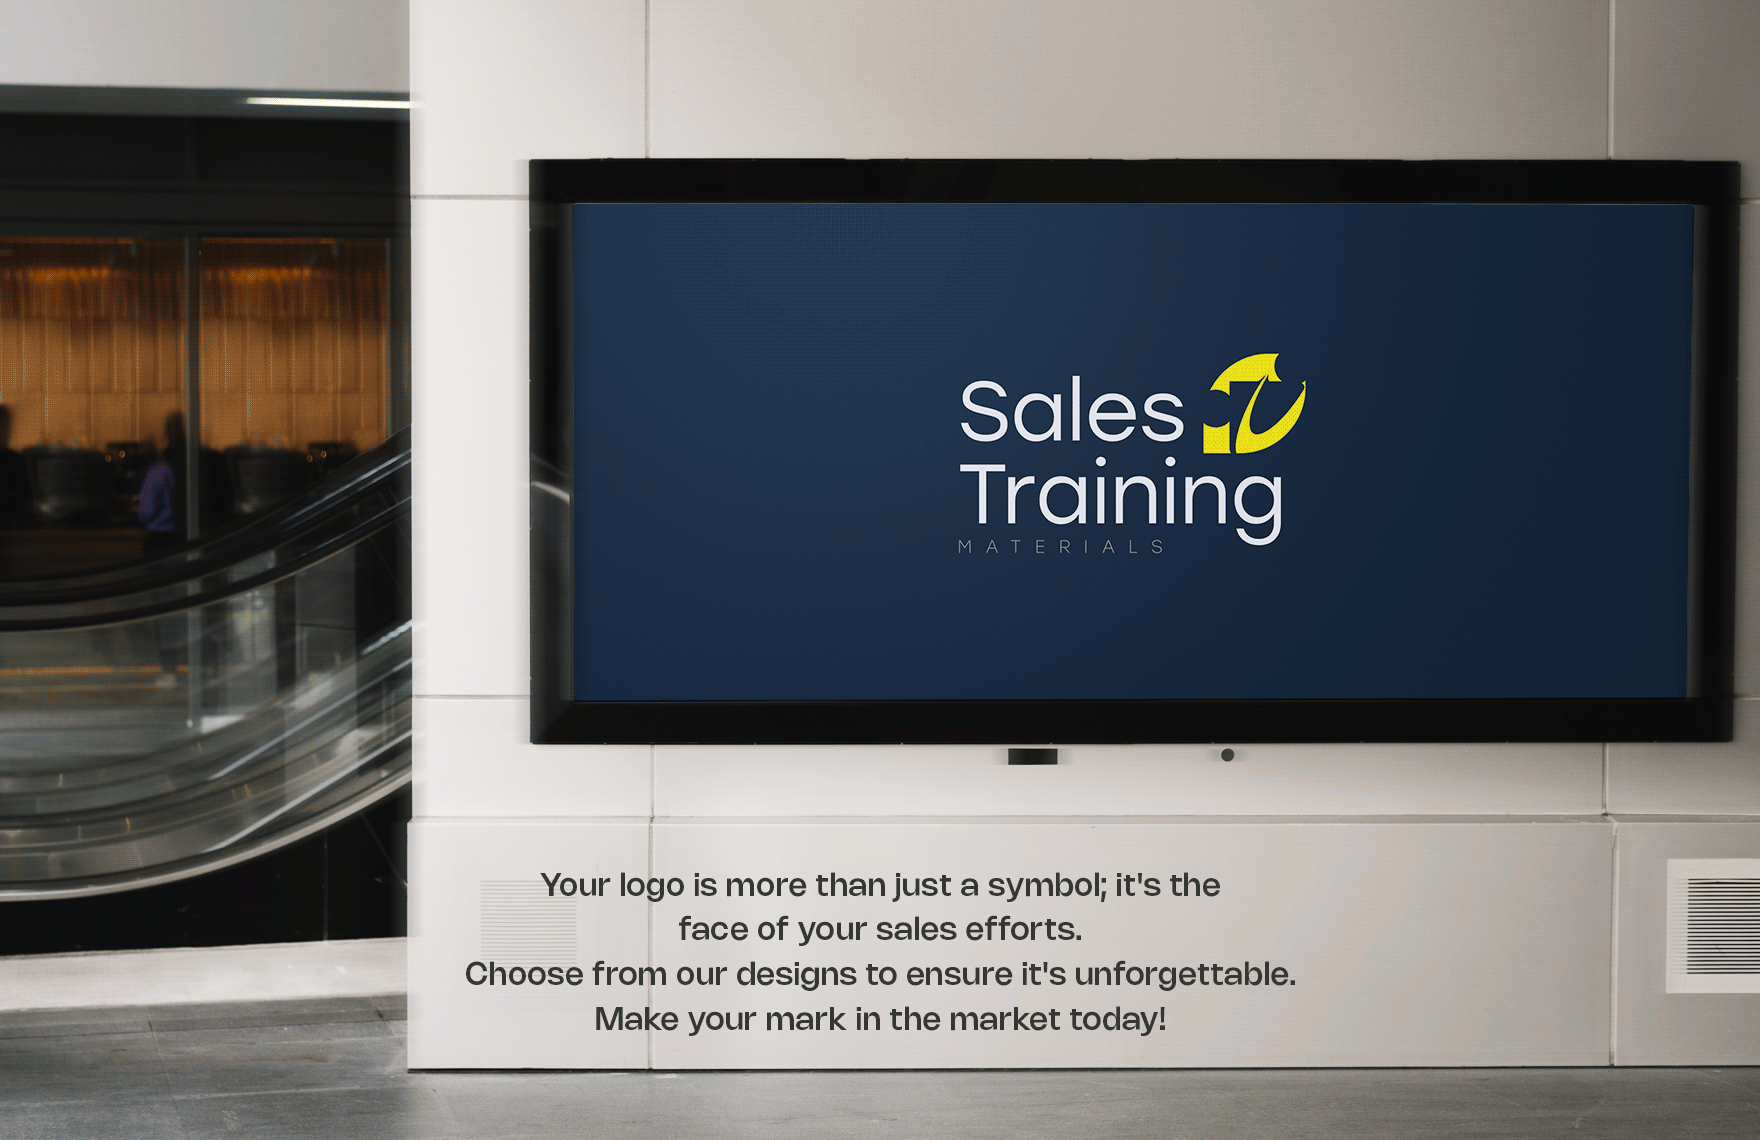 Sales Training Materials Logo Template